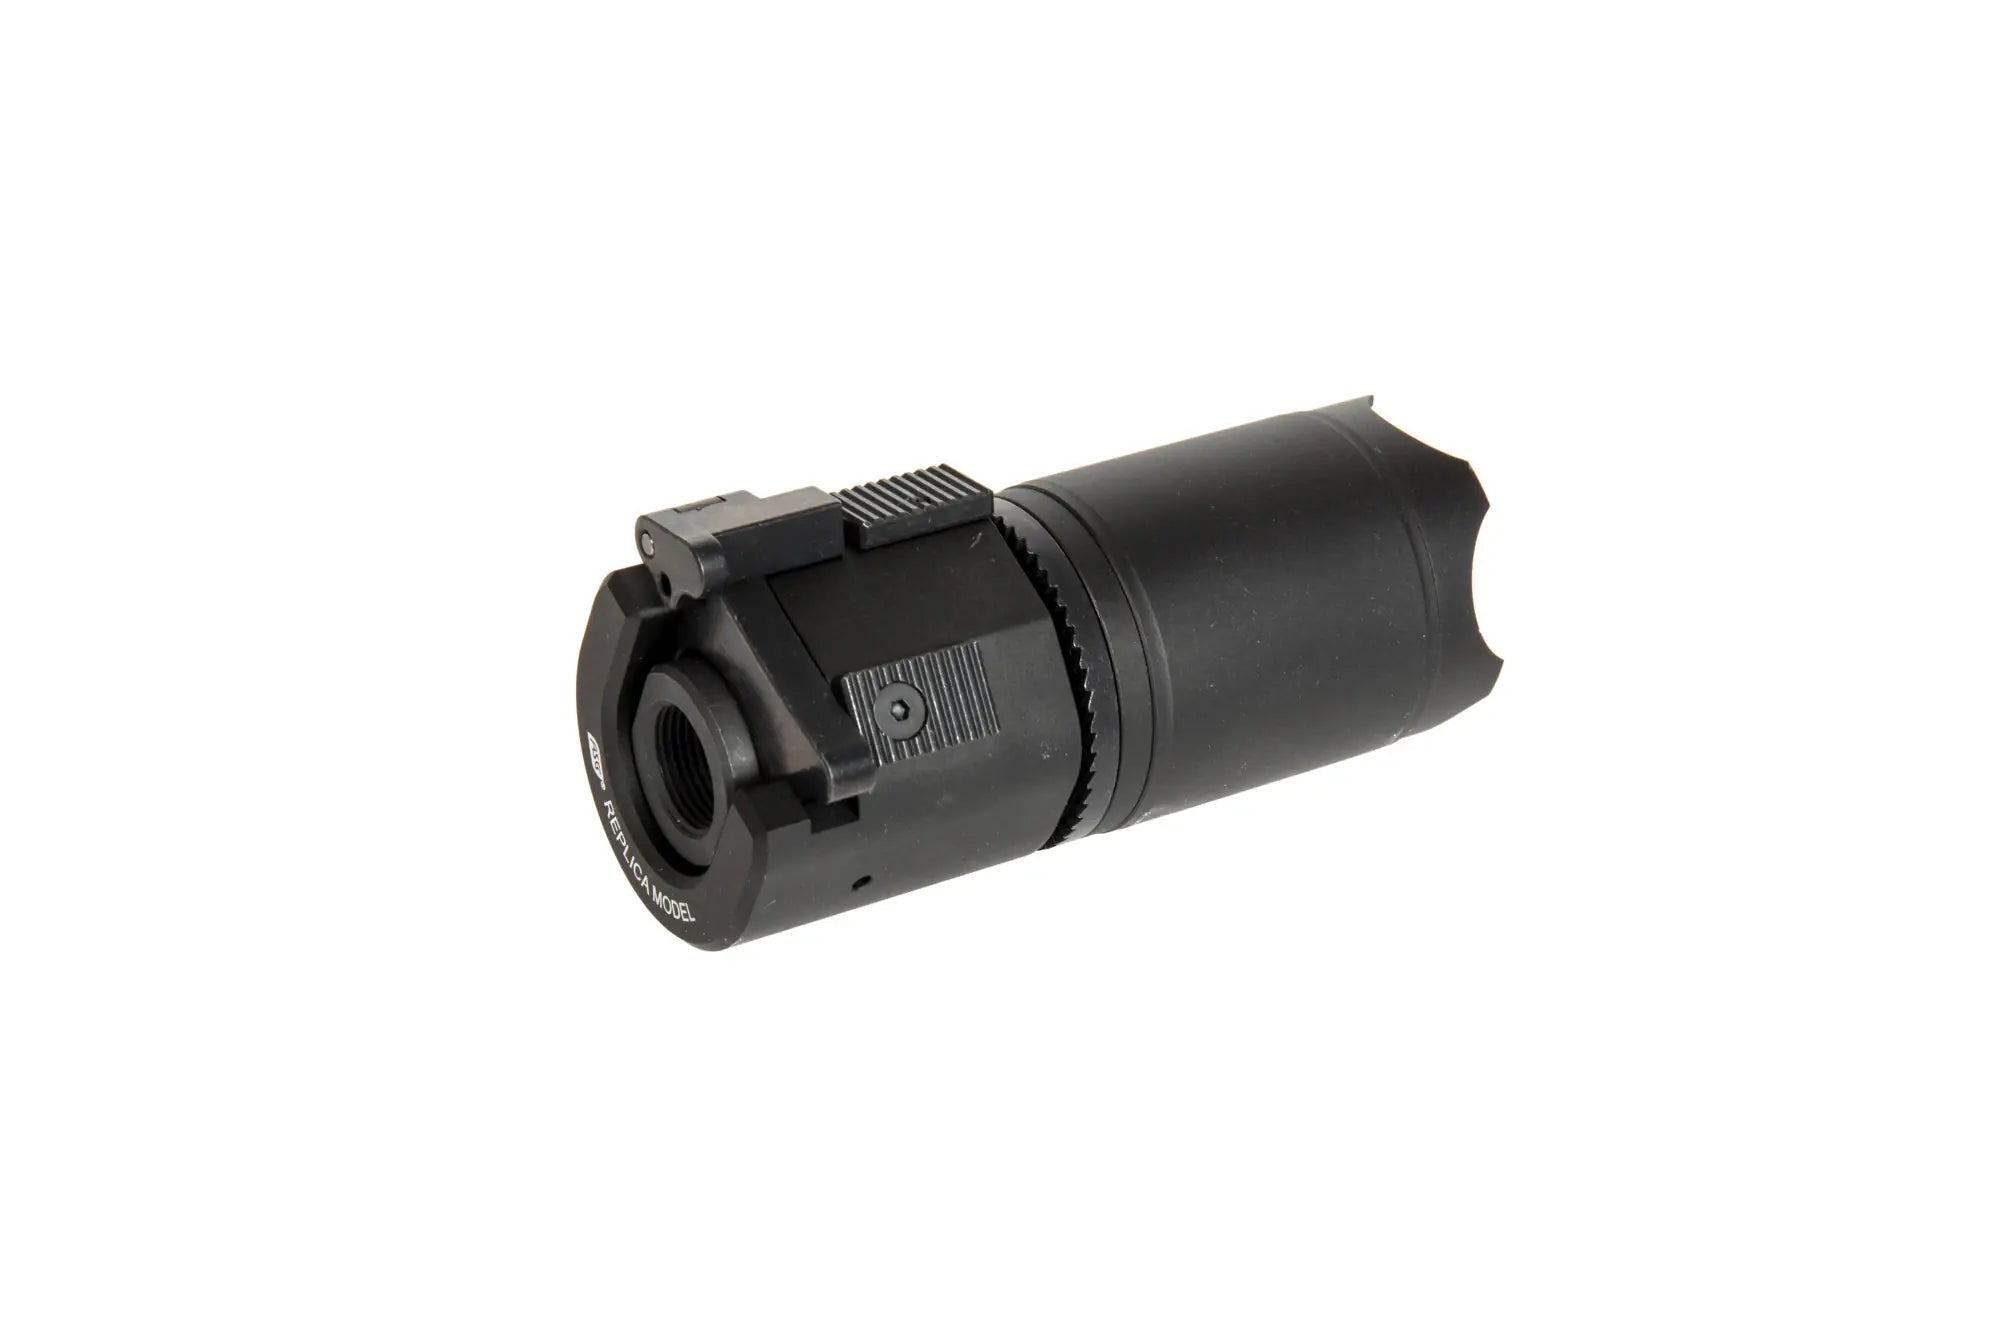 B&T Rotex-V 95 mm supressor - Black